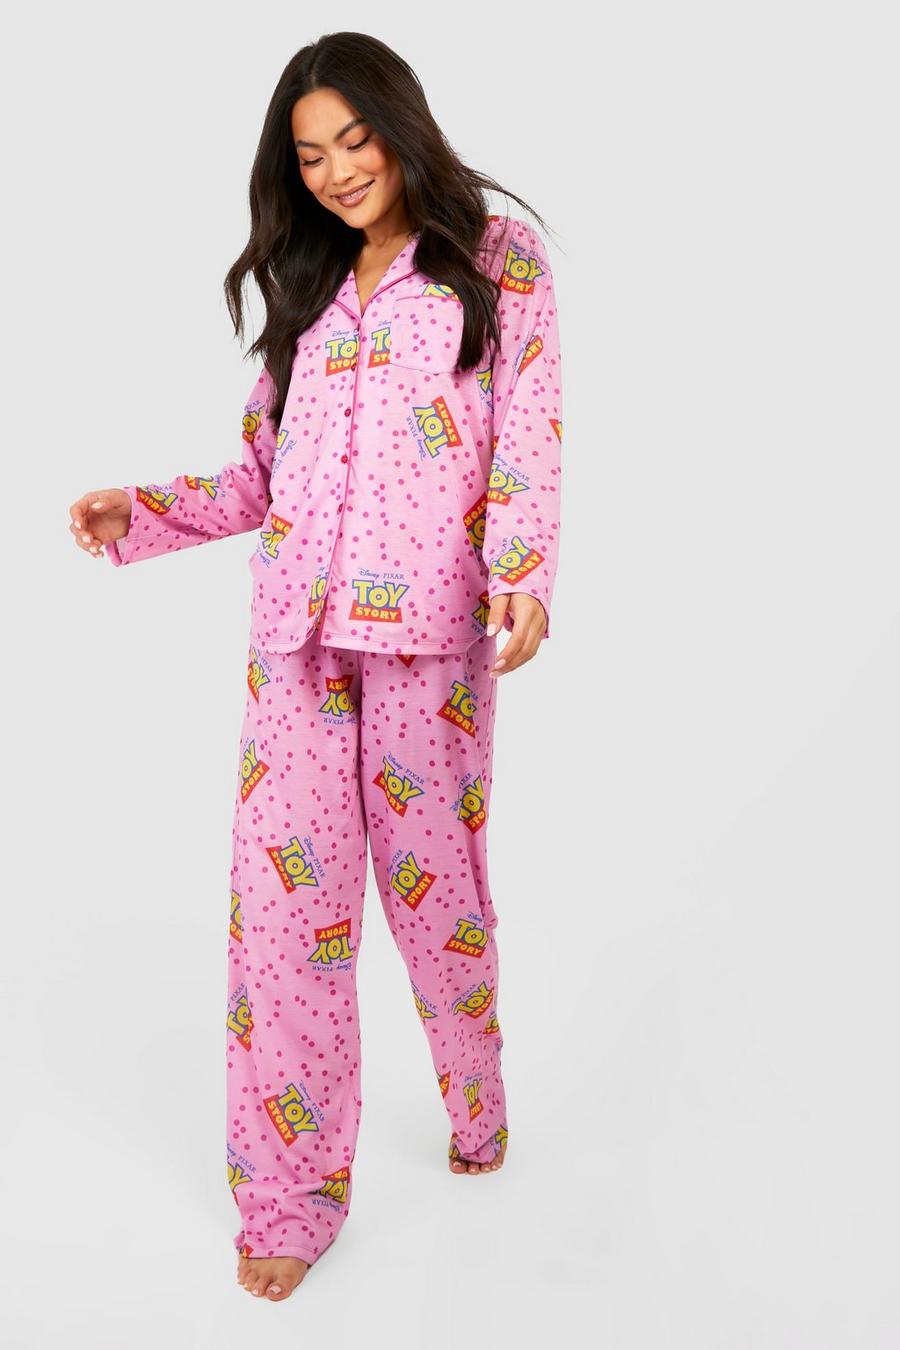 Pyjama Disney à imprimé Toy Story, Pink image number 1